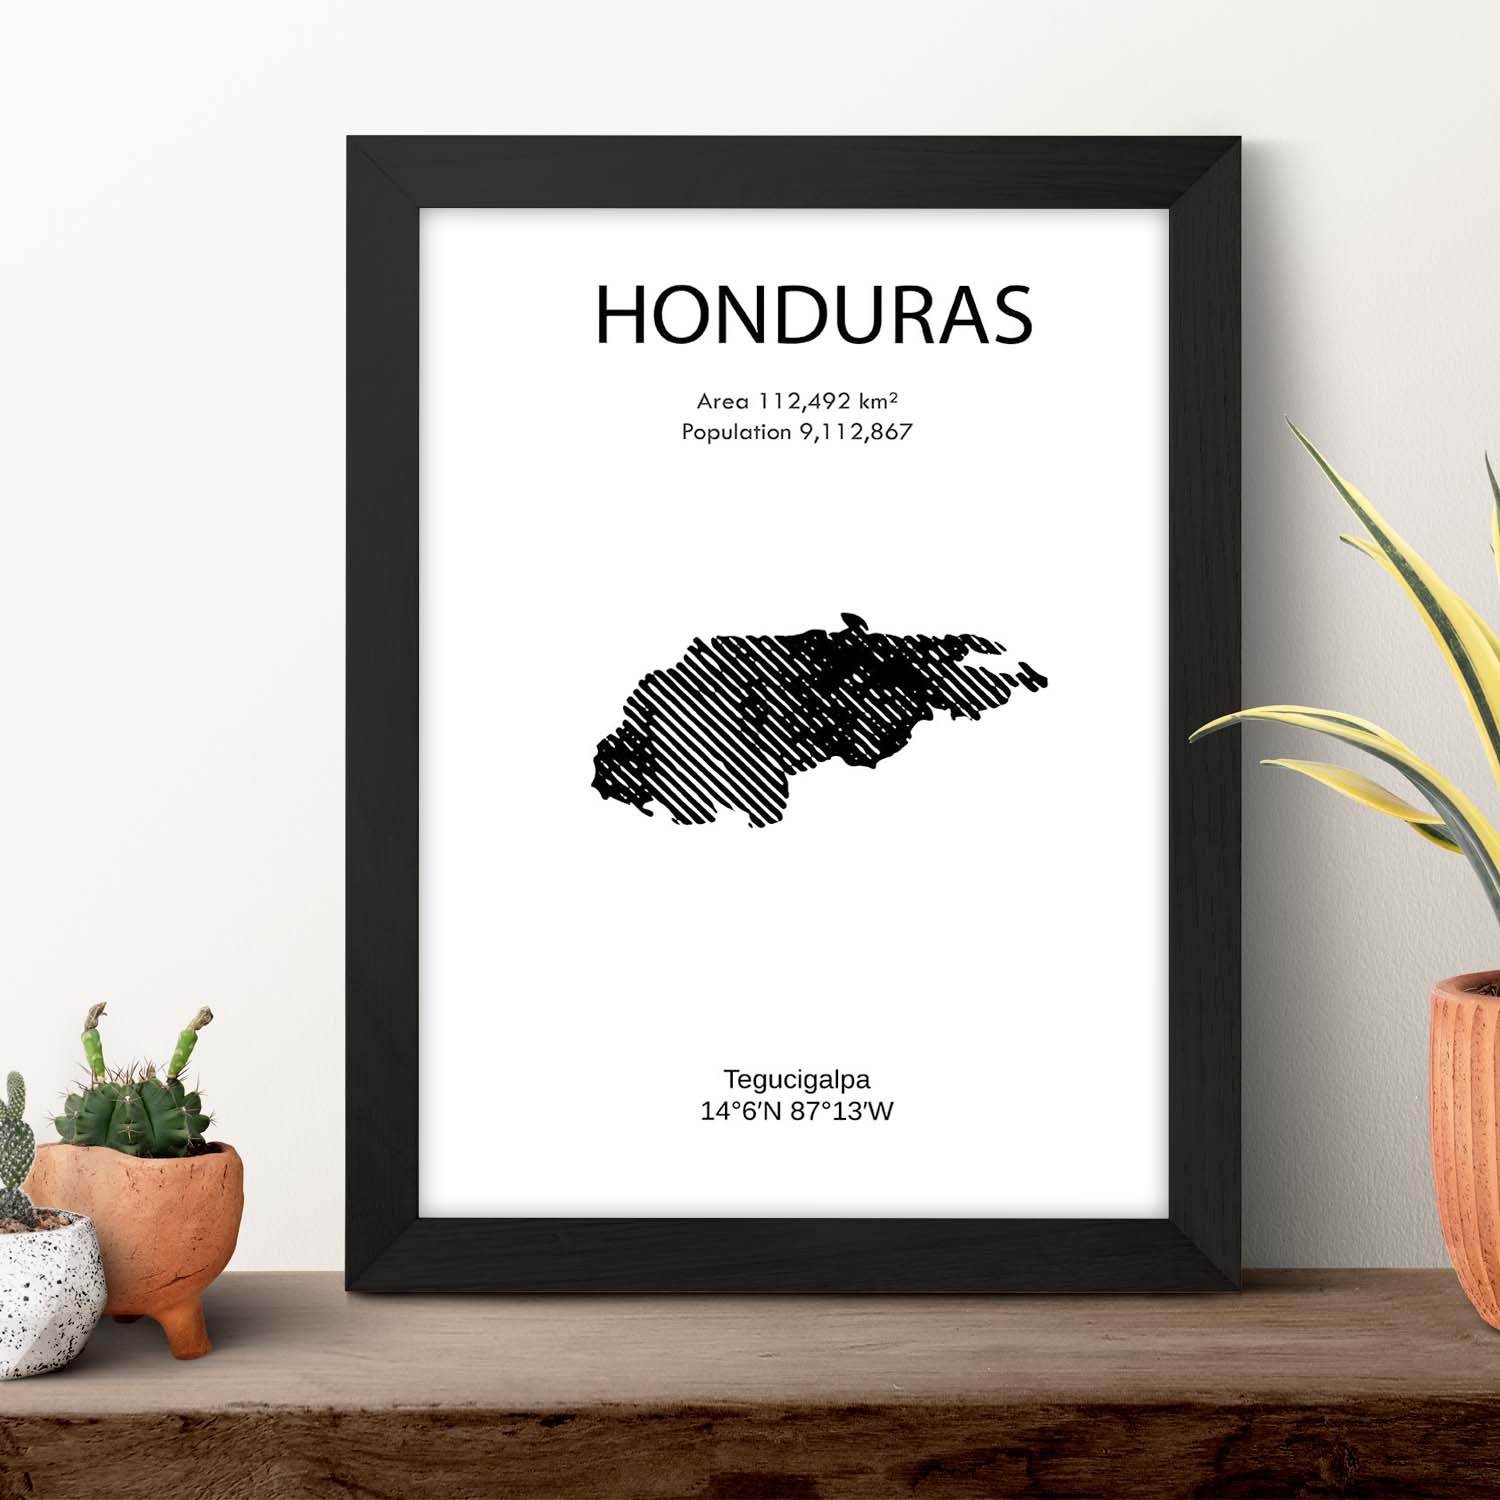 Poster de Honduras. Láminas de paises y continentes del mundo.-Artwork-Nacnic-Nacnic Estudio SL